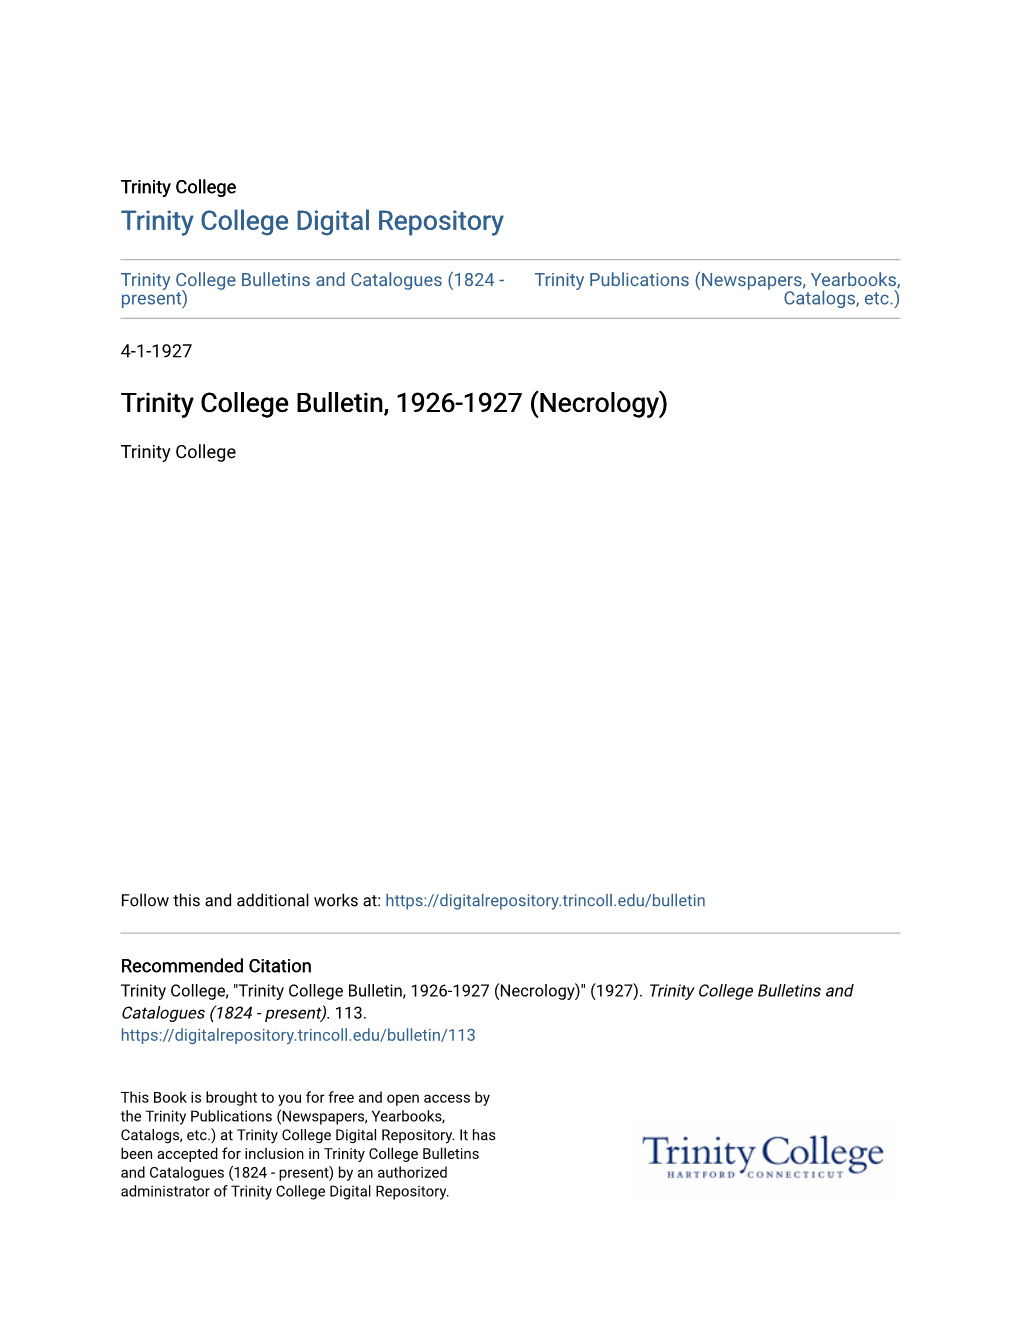 Trinity College Bulletin, 1926-1927 (Necrology)